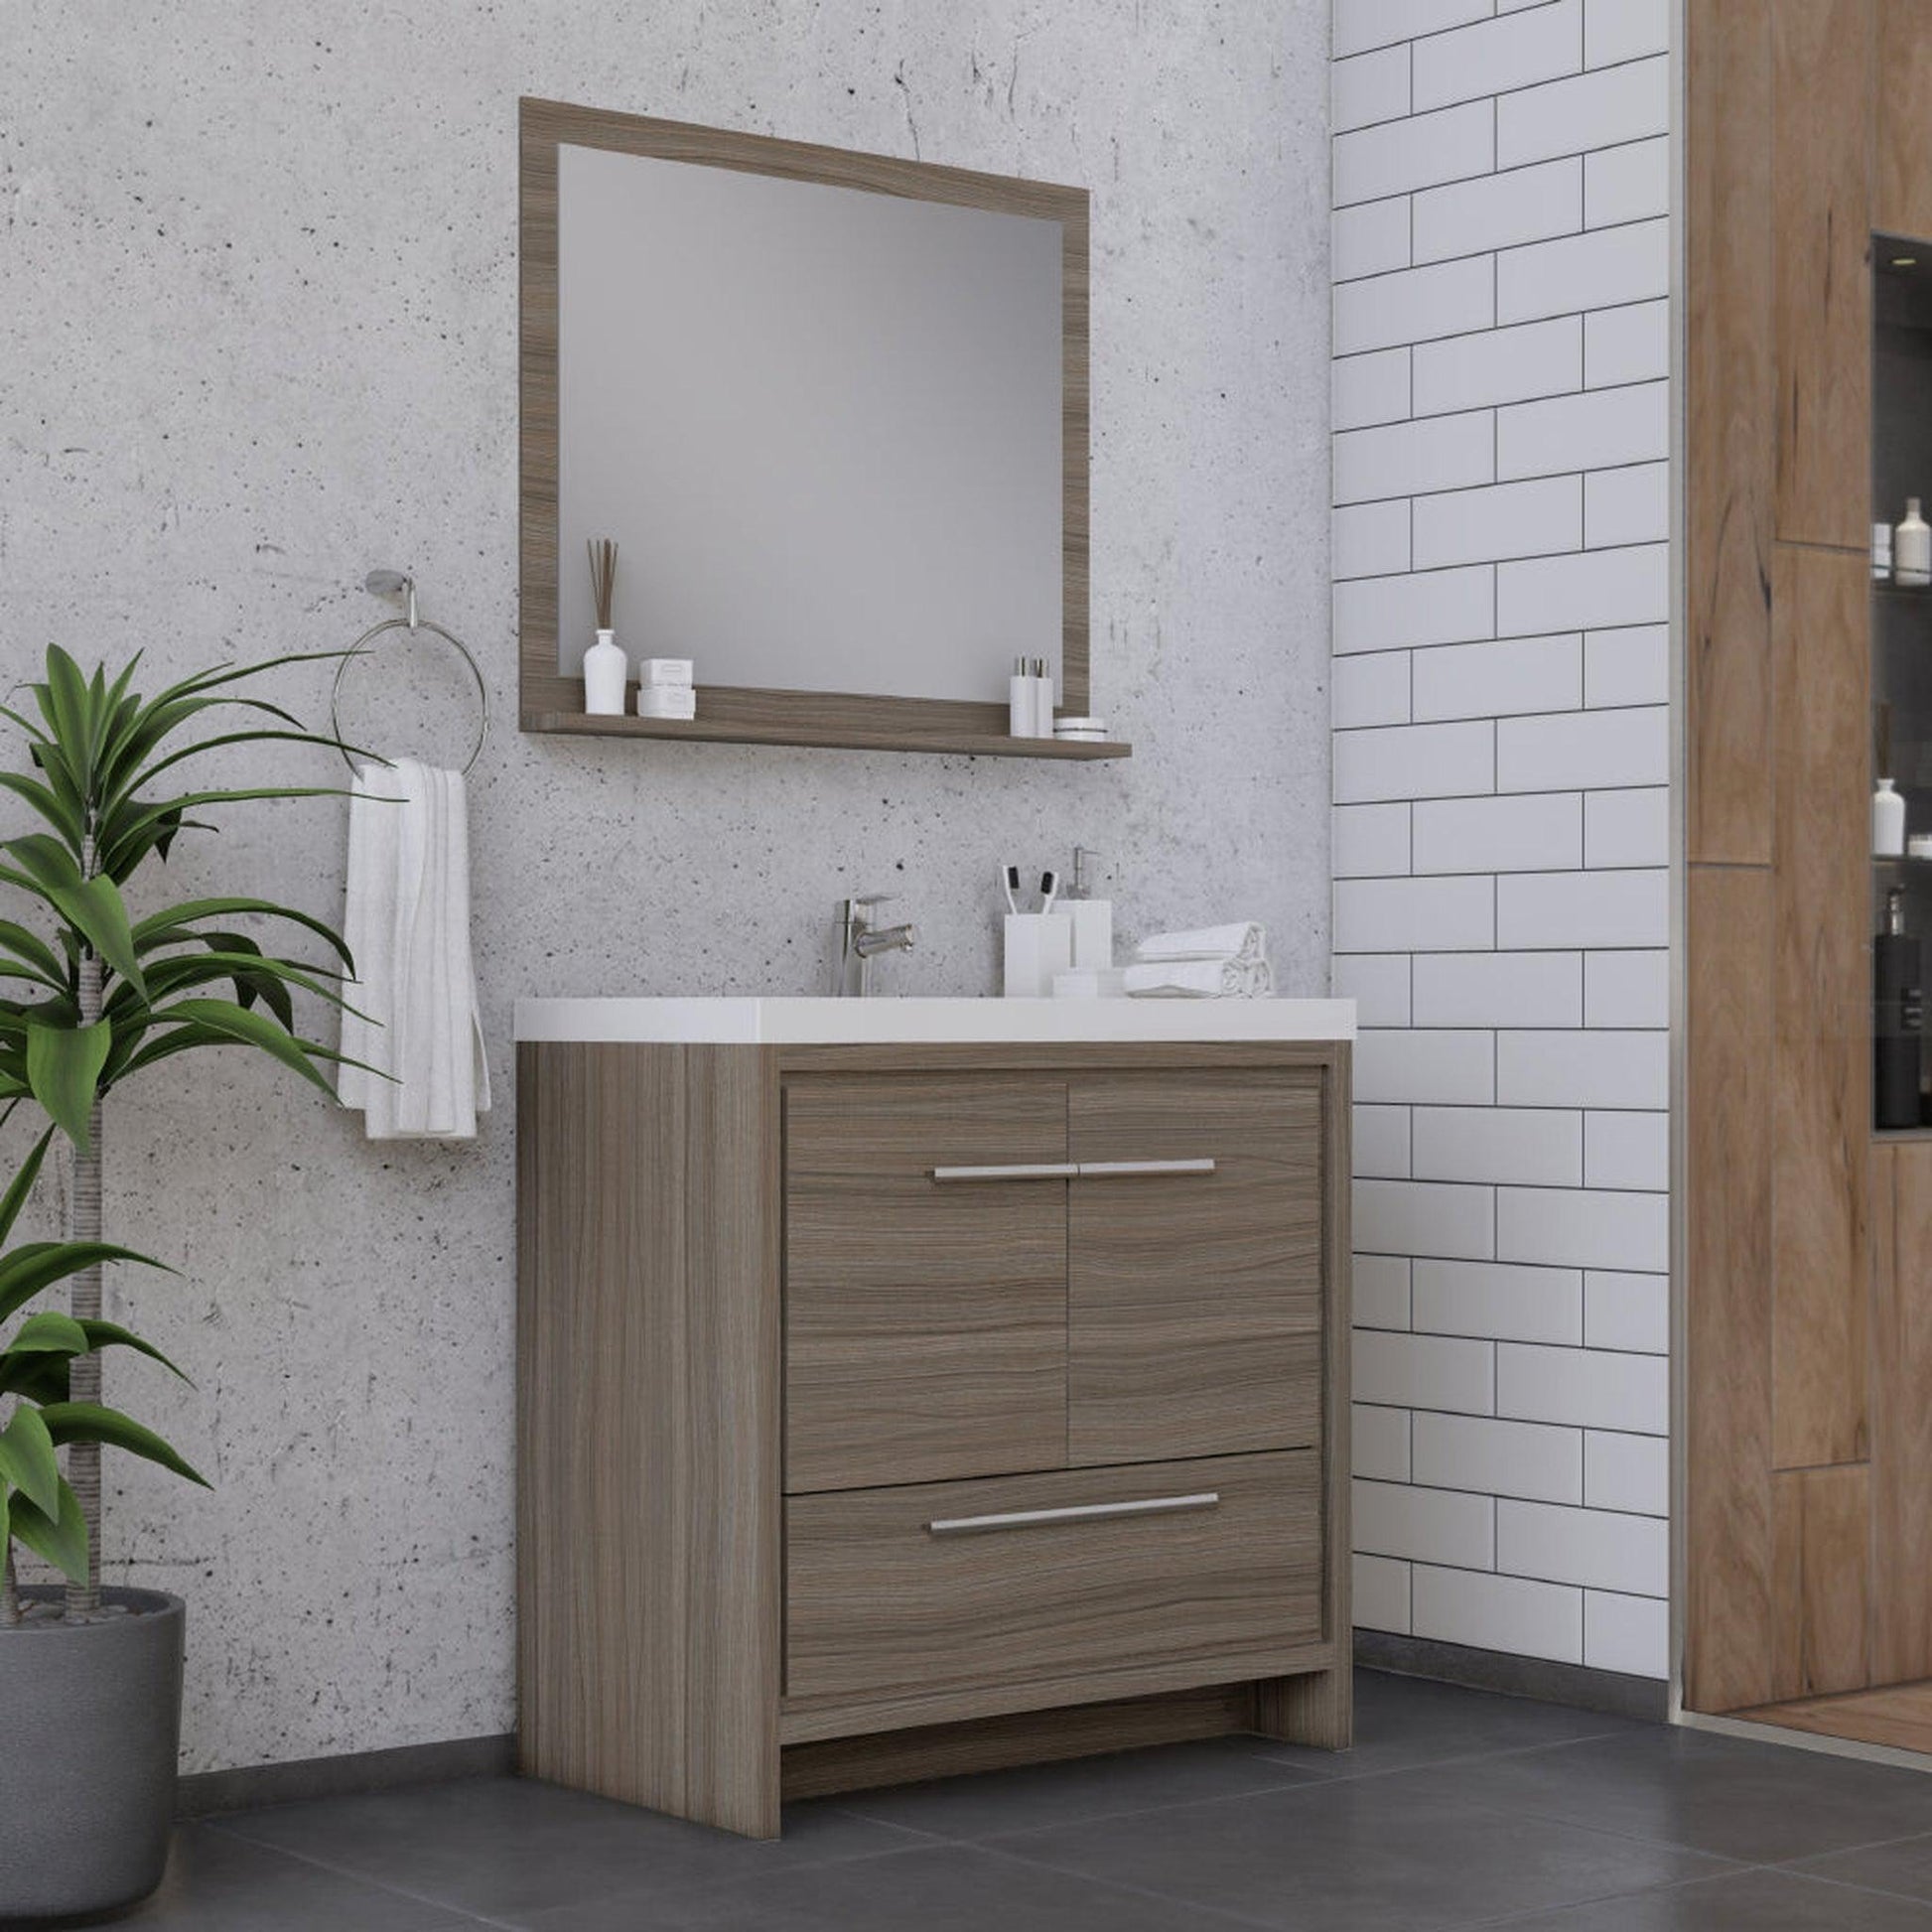 Alya Bath Sortino 36" Single Gray Modern Freestanding Bathroom Vanity With Acrylic Top and Integrated Sink